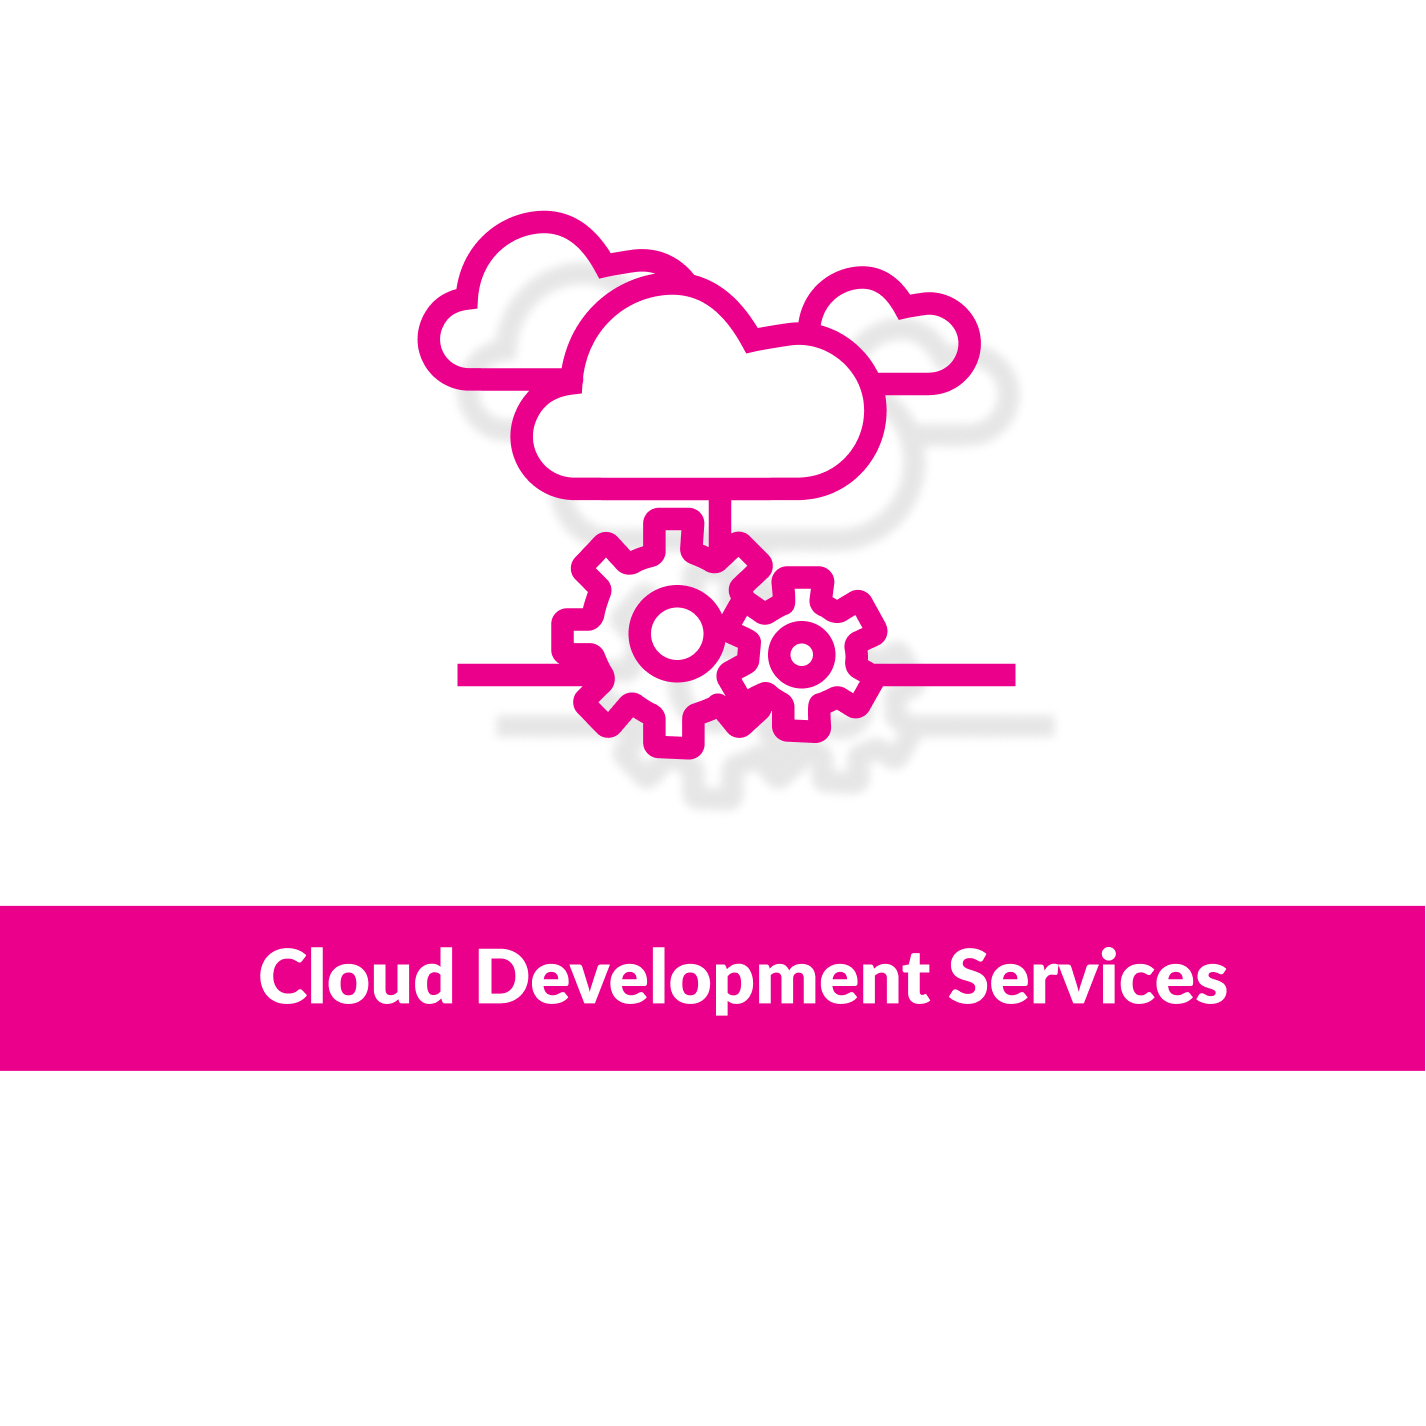 AWS Serverless Application Development Services